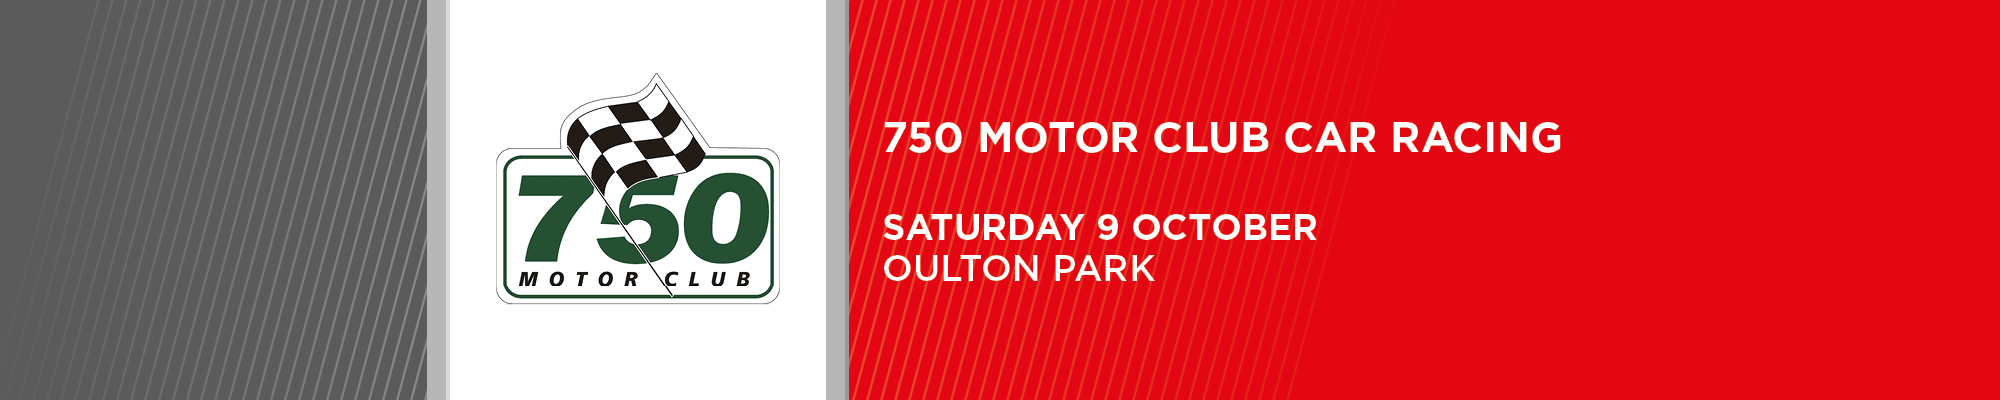  750 Motor Club Car Championships